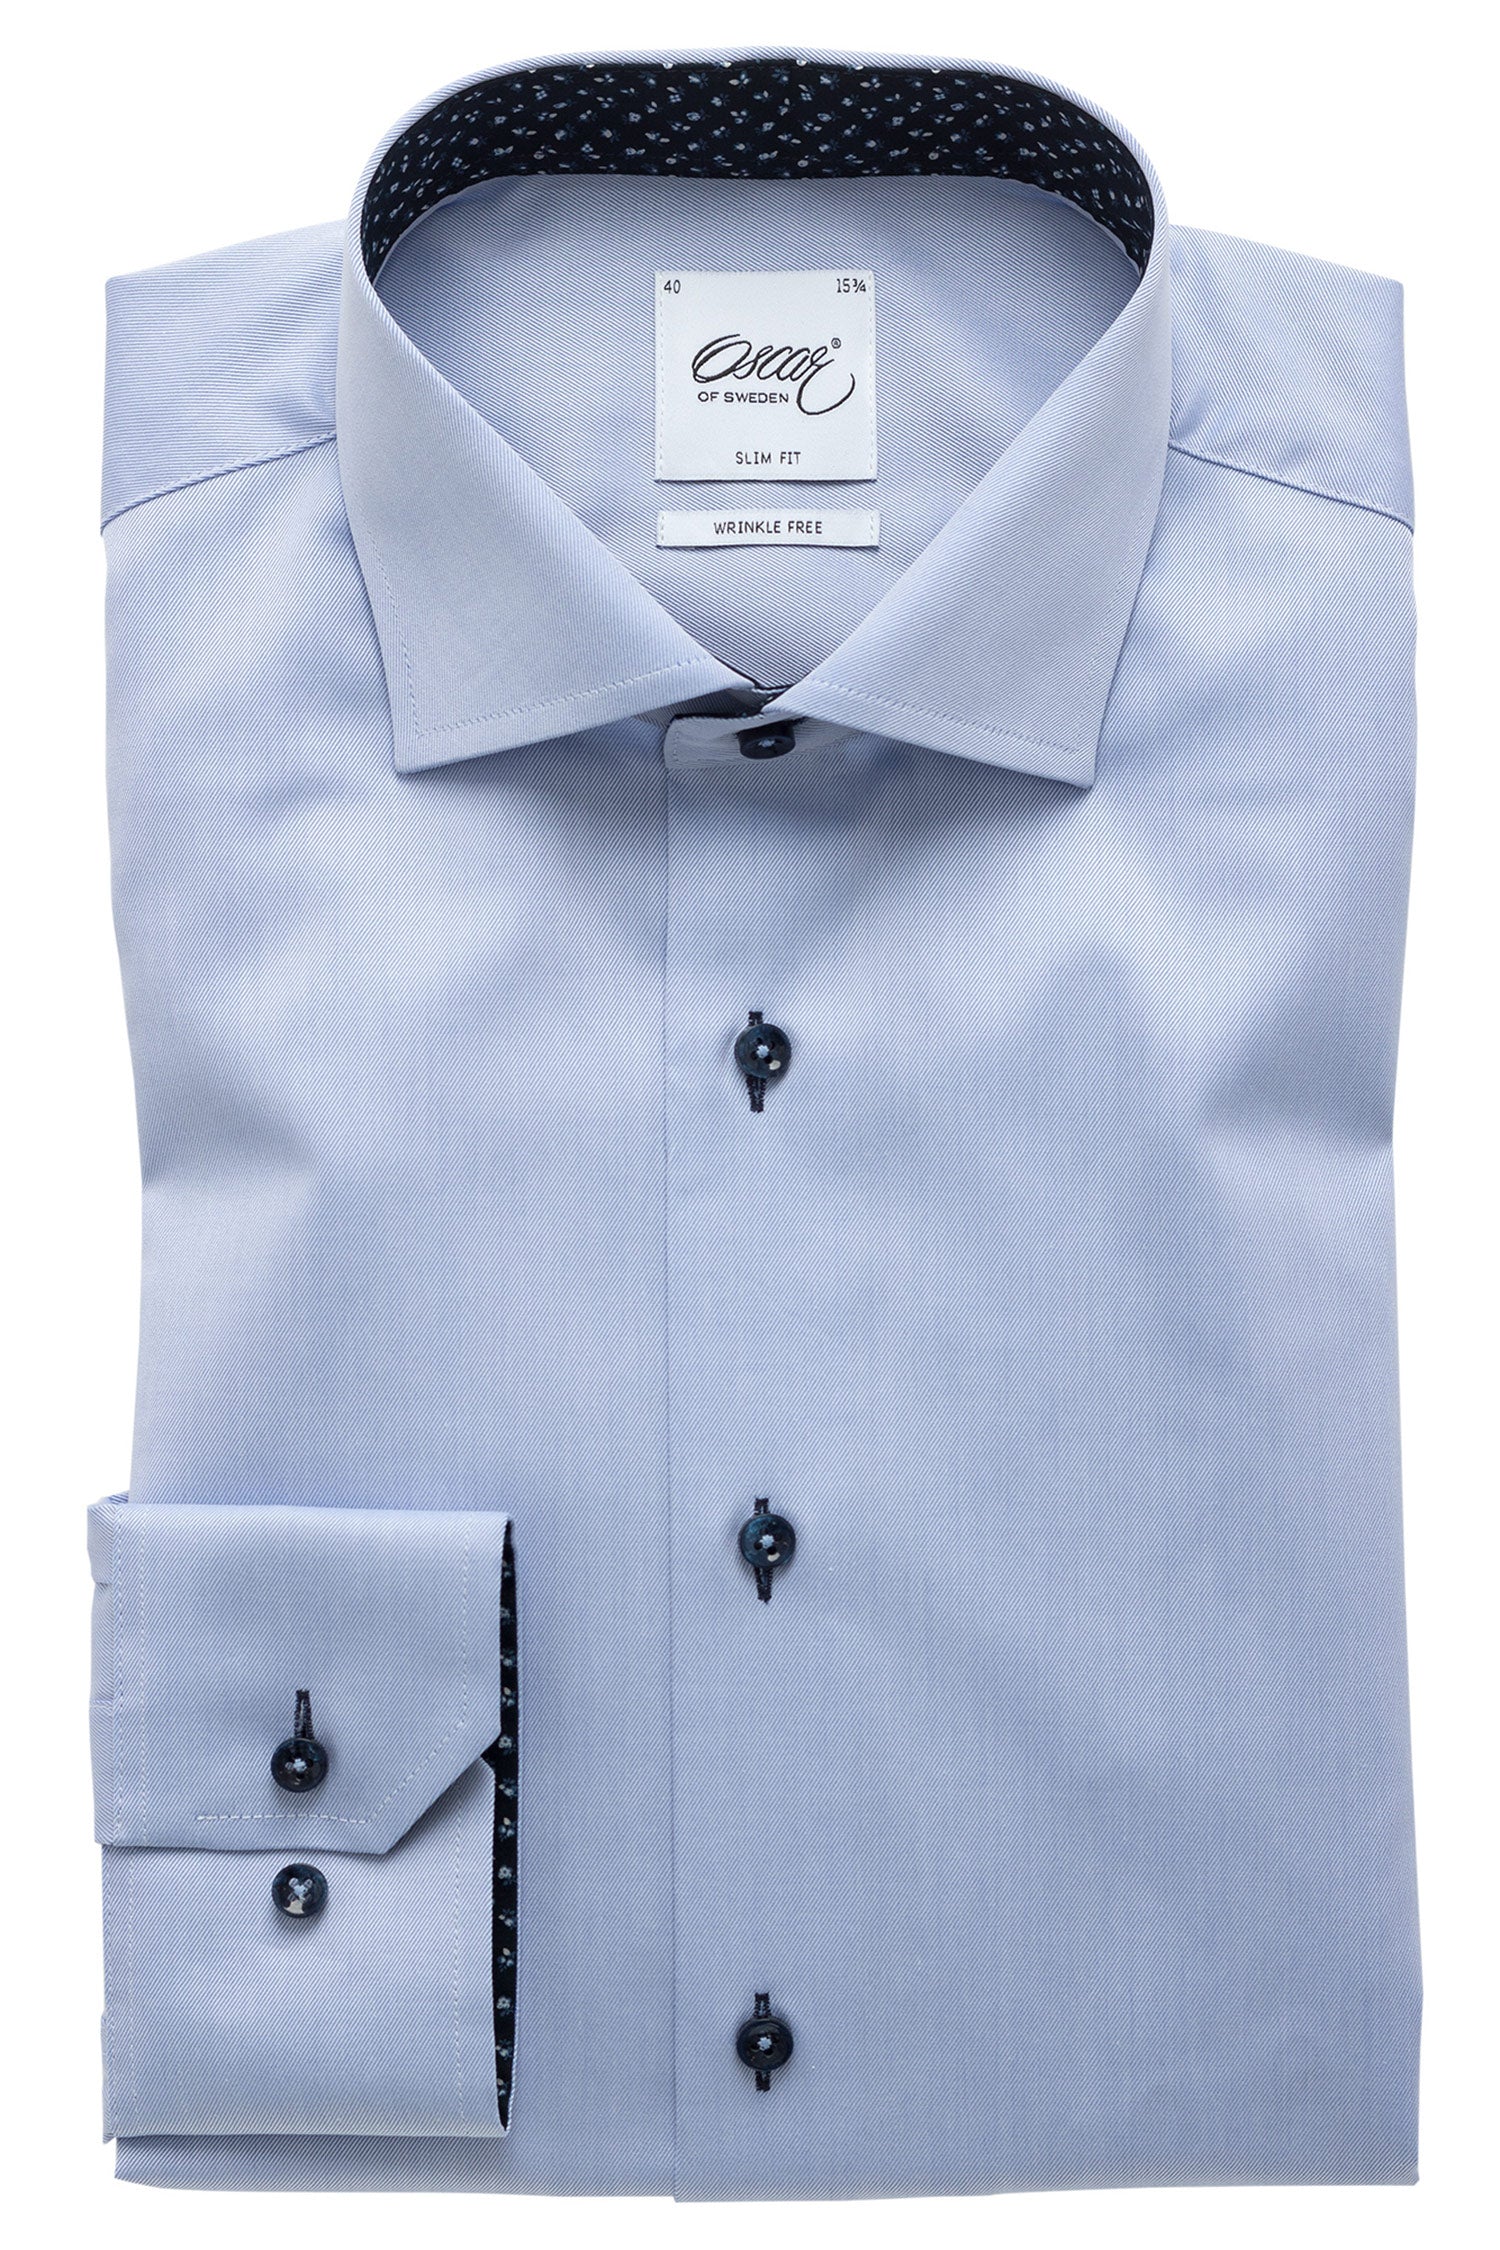 Light blue slim shirt with navy details